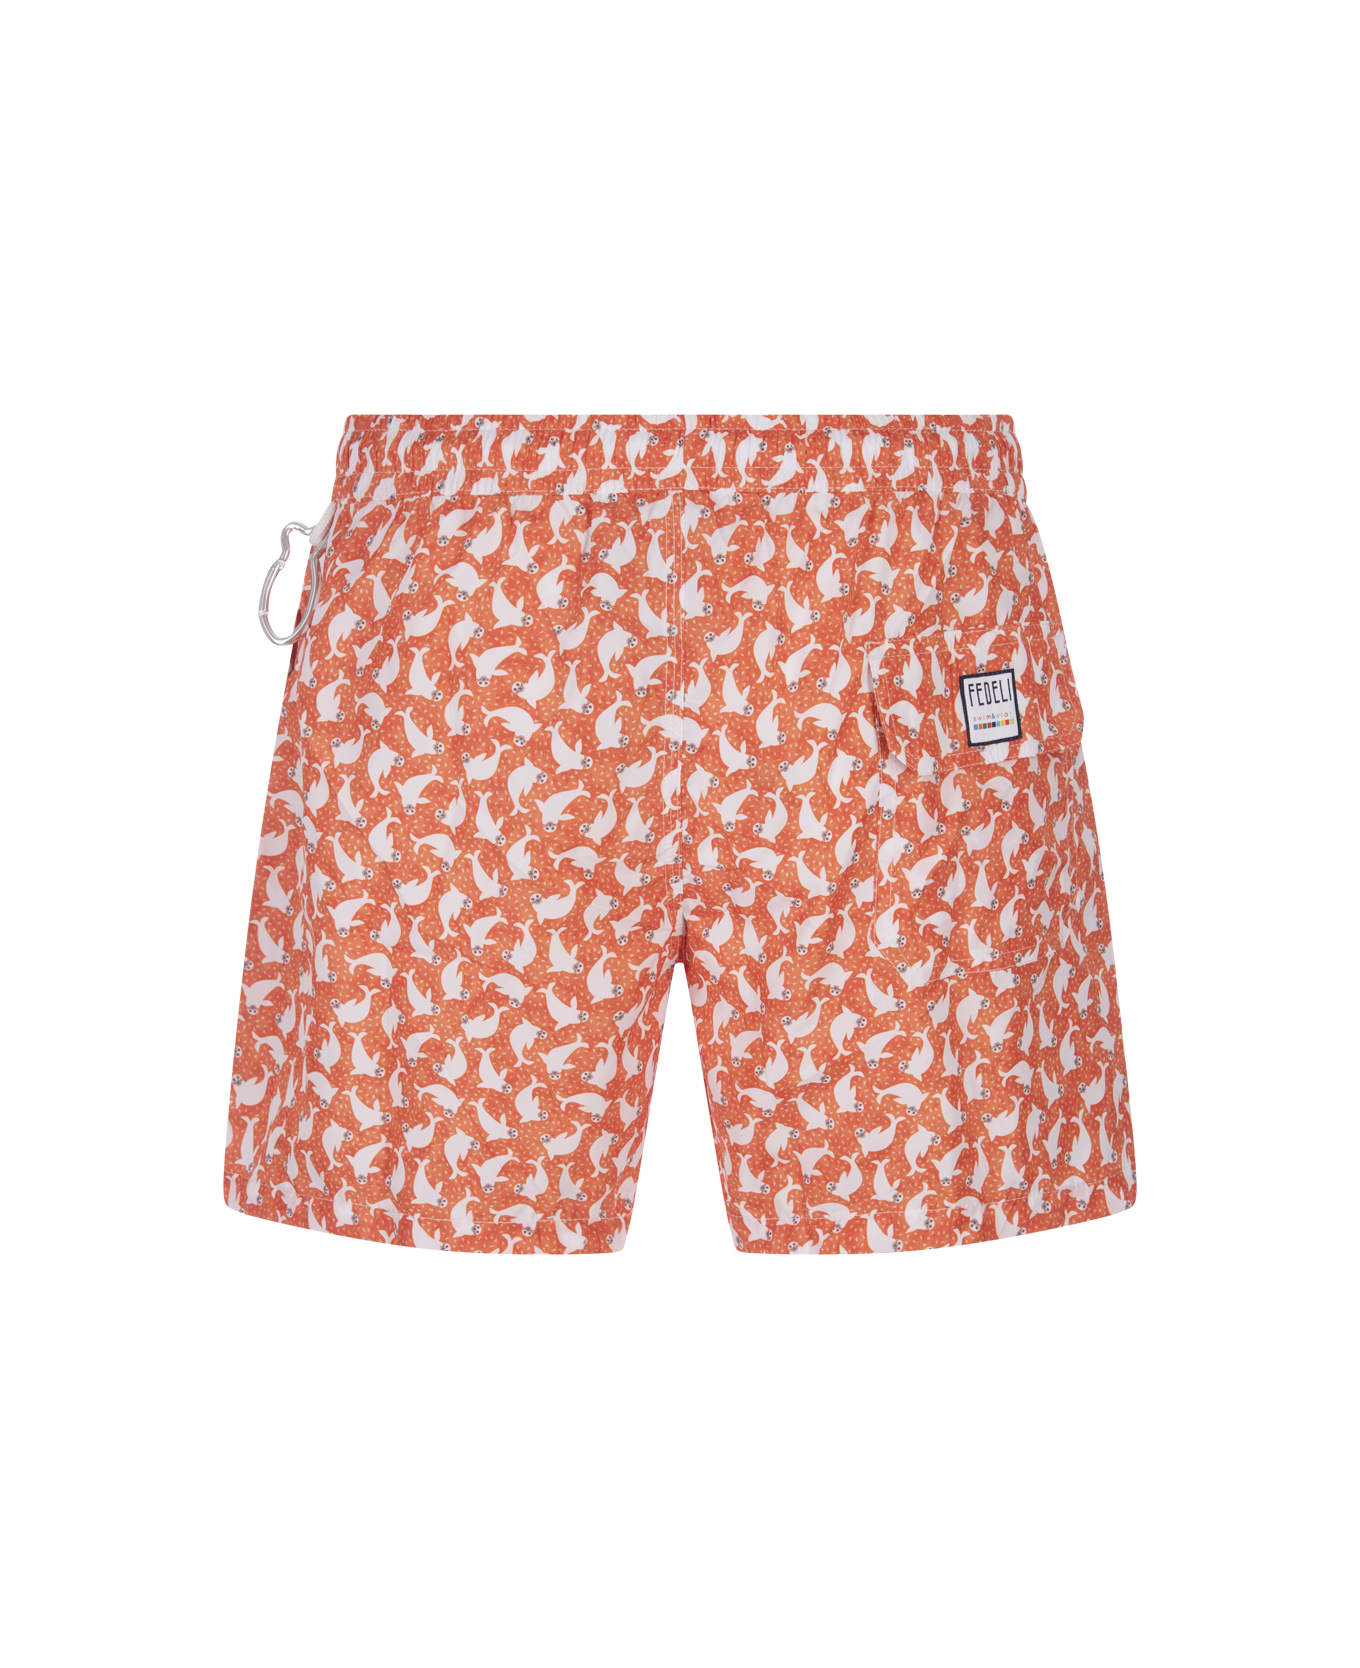 Fedeli Orange Swim Shorts With Seals Pattern - Orange